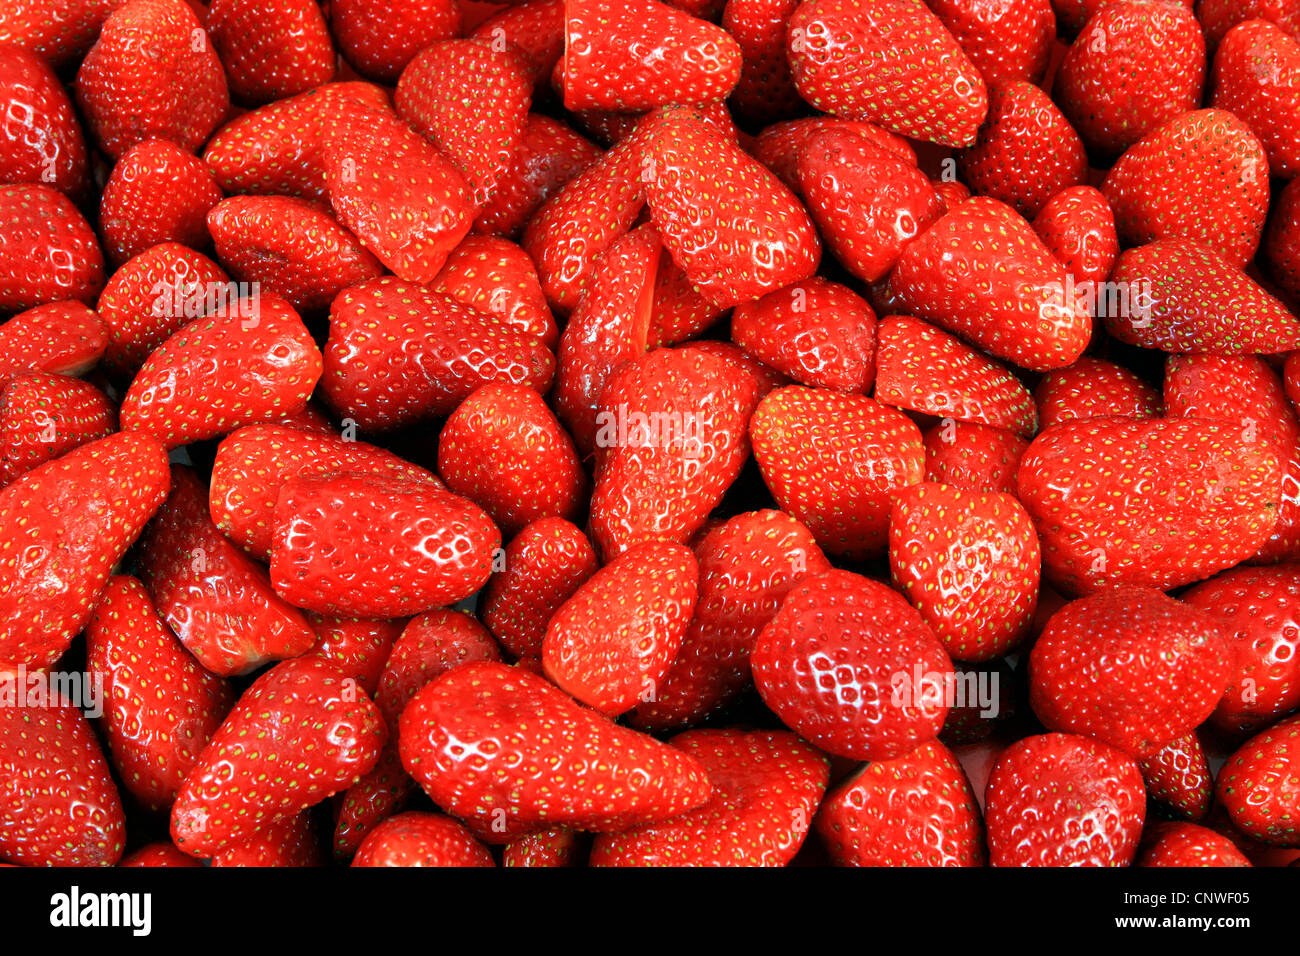 Hybrid-Erdbeere, Garten-Erdbeere (Fragaria X ananassa, Fragaria Ananassa), gereinigt und geschnitten Erdbeeren Stockfoto